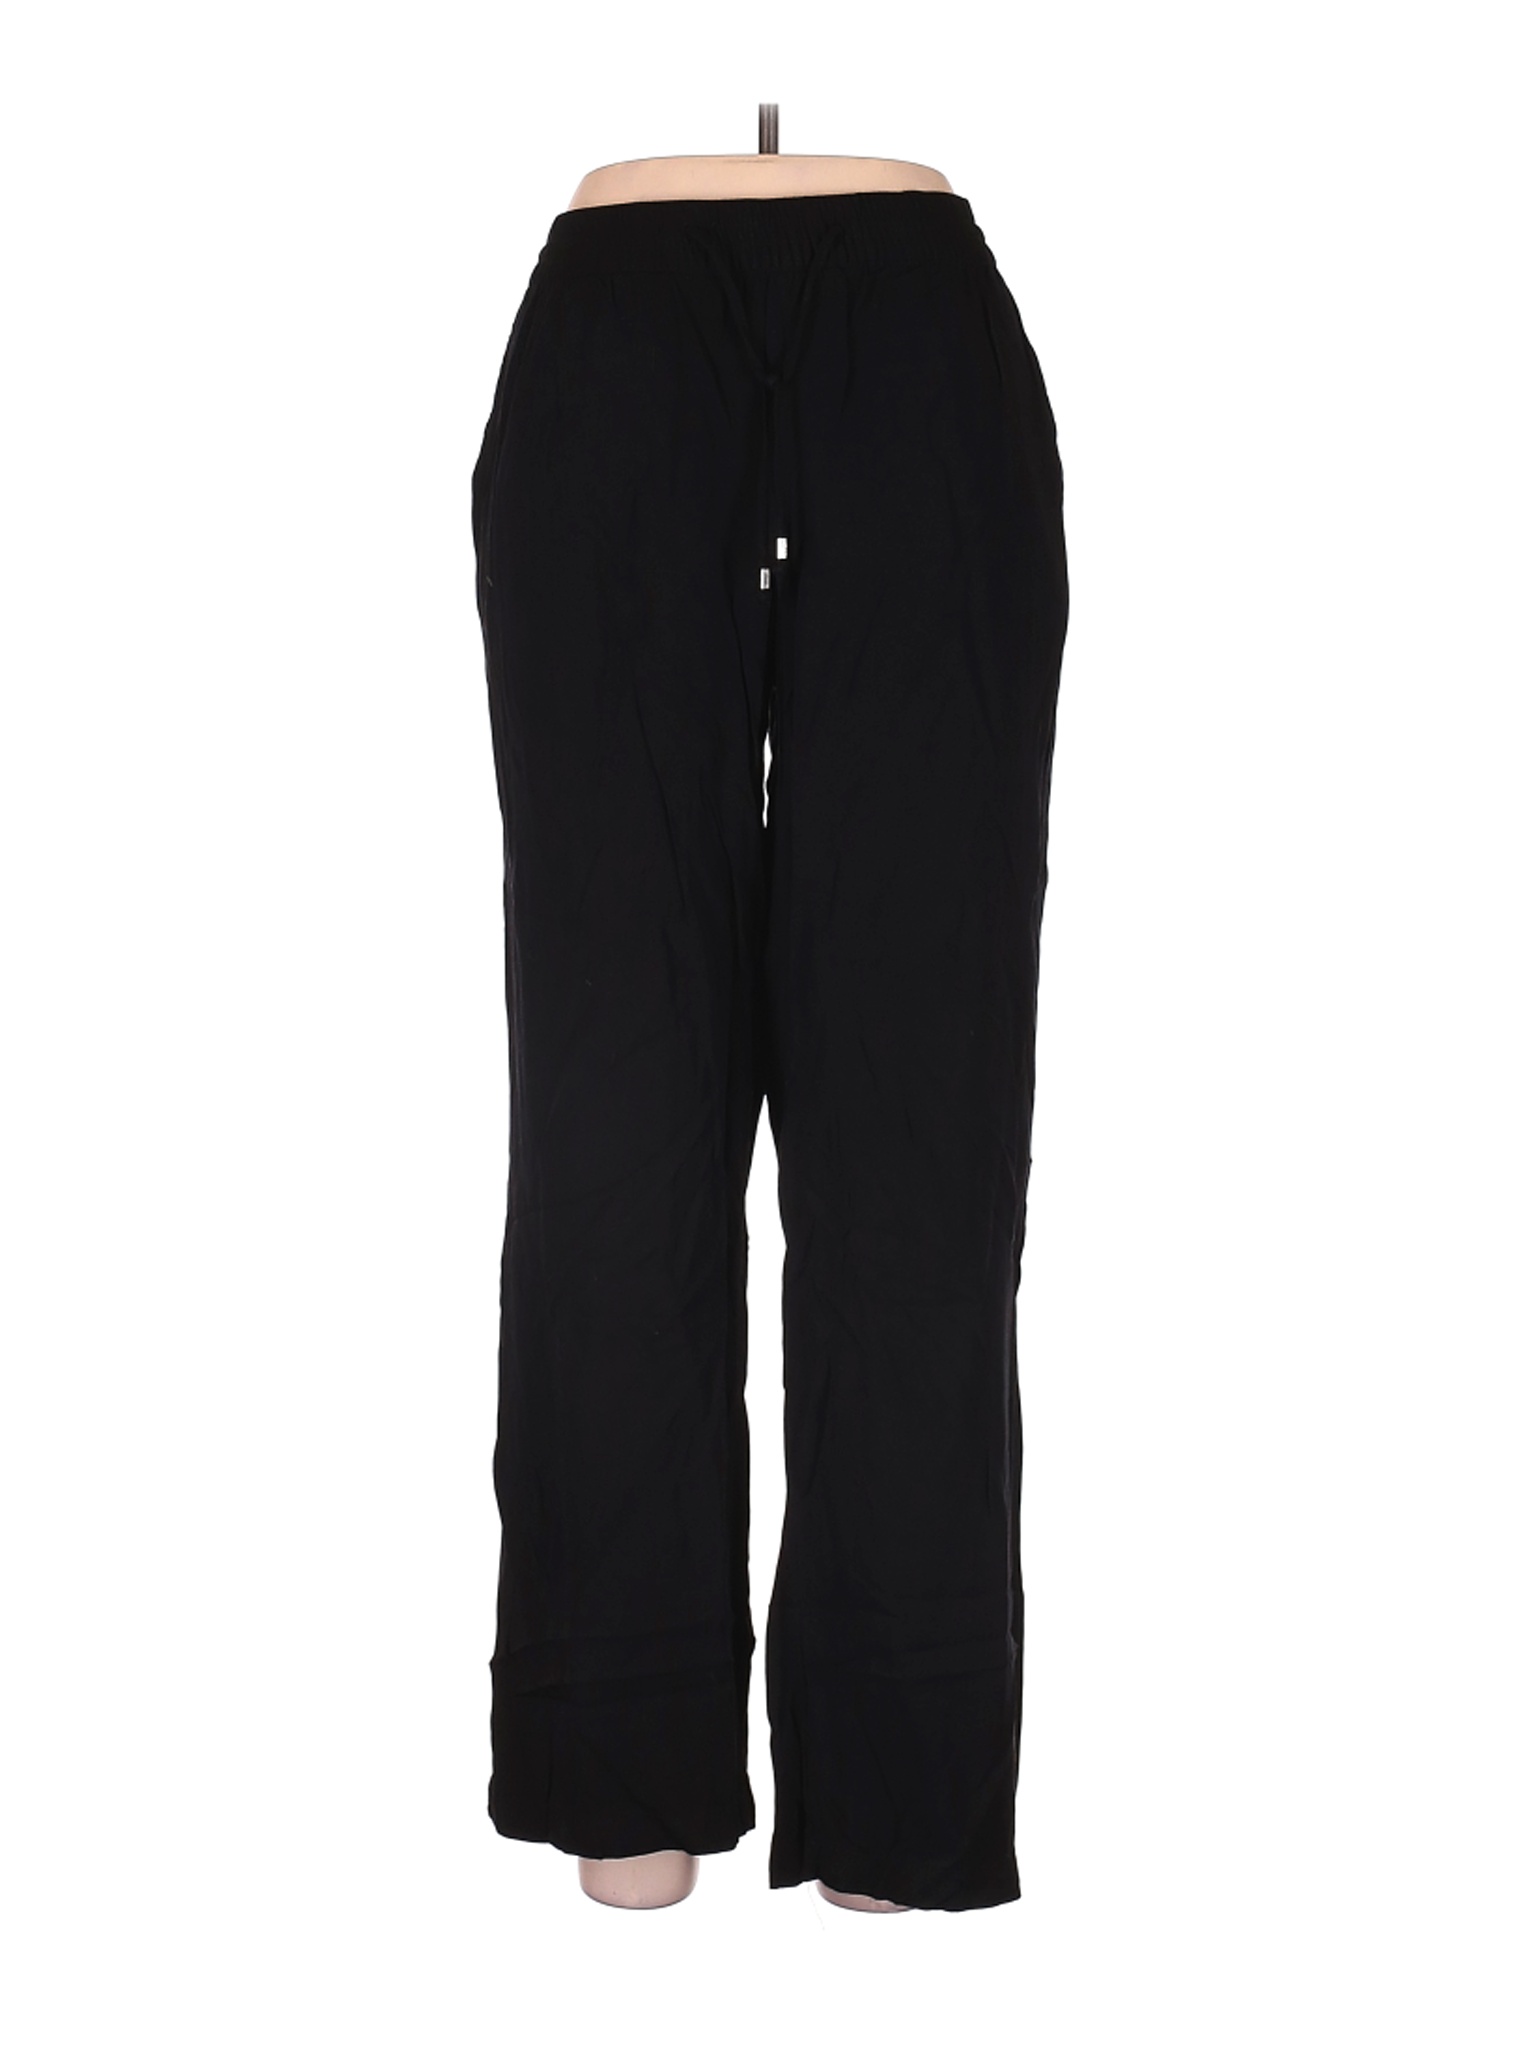 Old Navy Women Black Casual Pants L | eBay